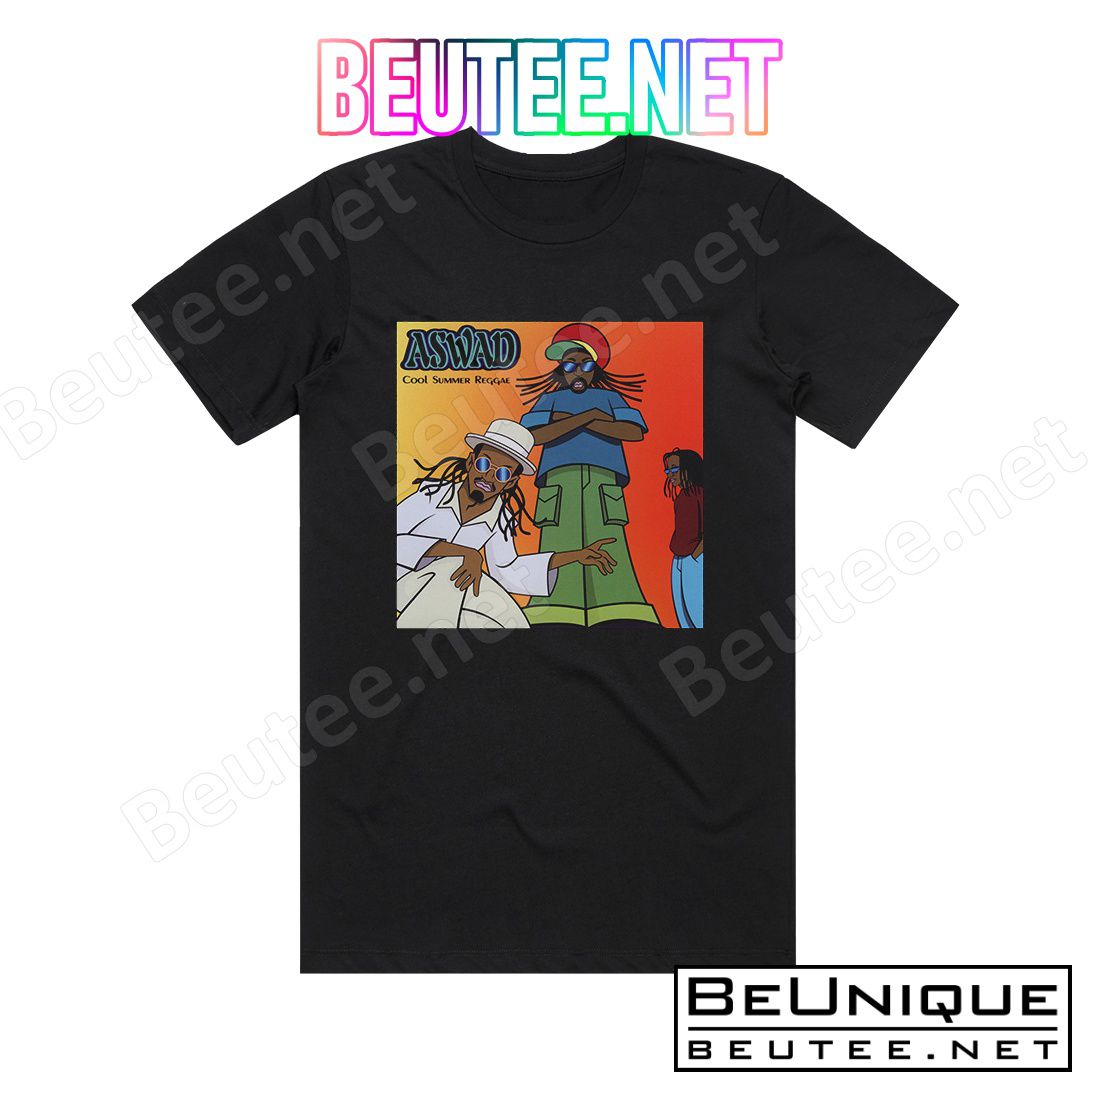 Aswad Cool Summer Reggae Album Cover T-Shirt